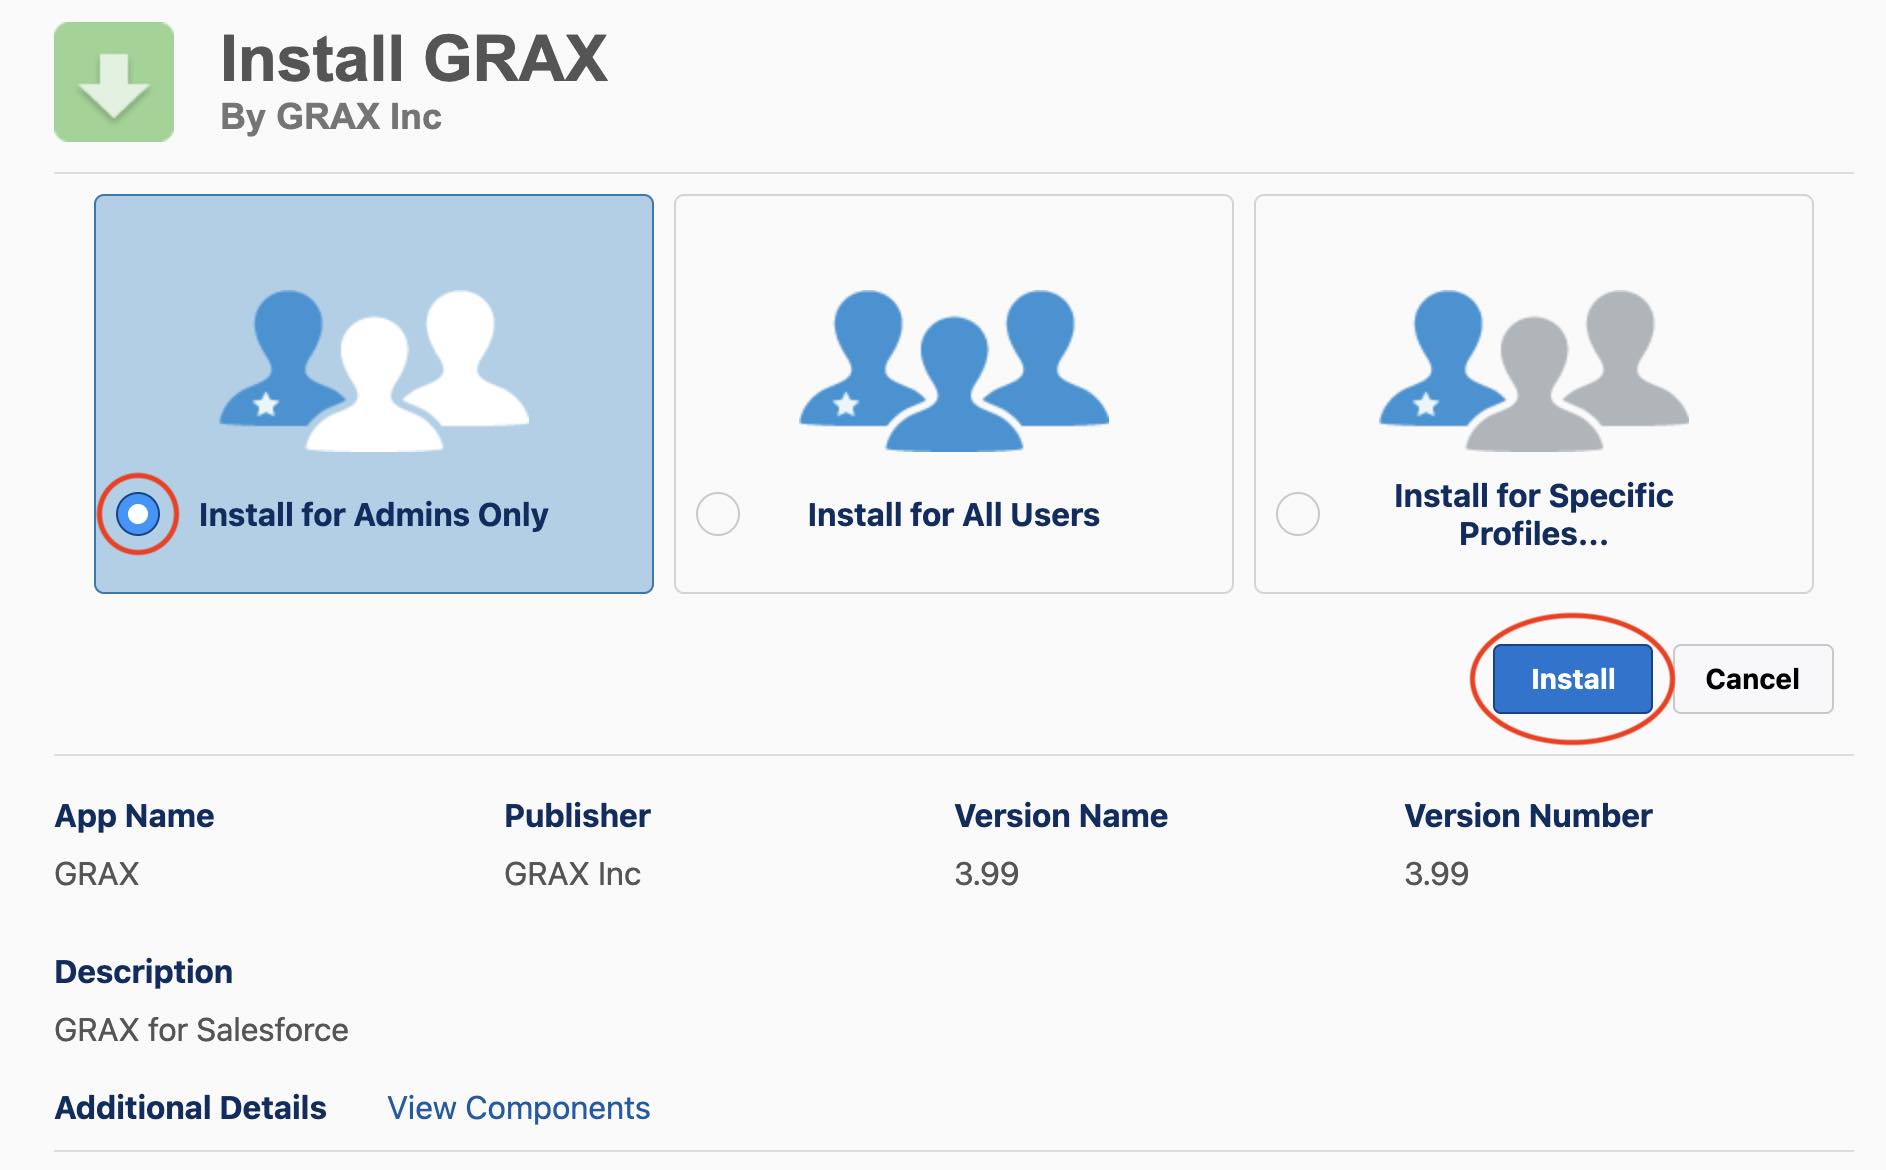 Install GRAX